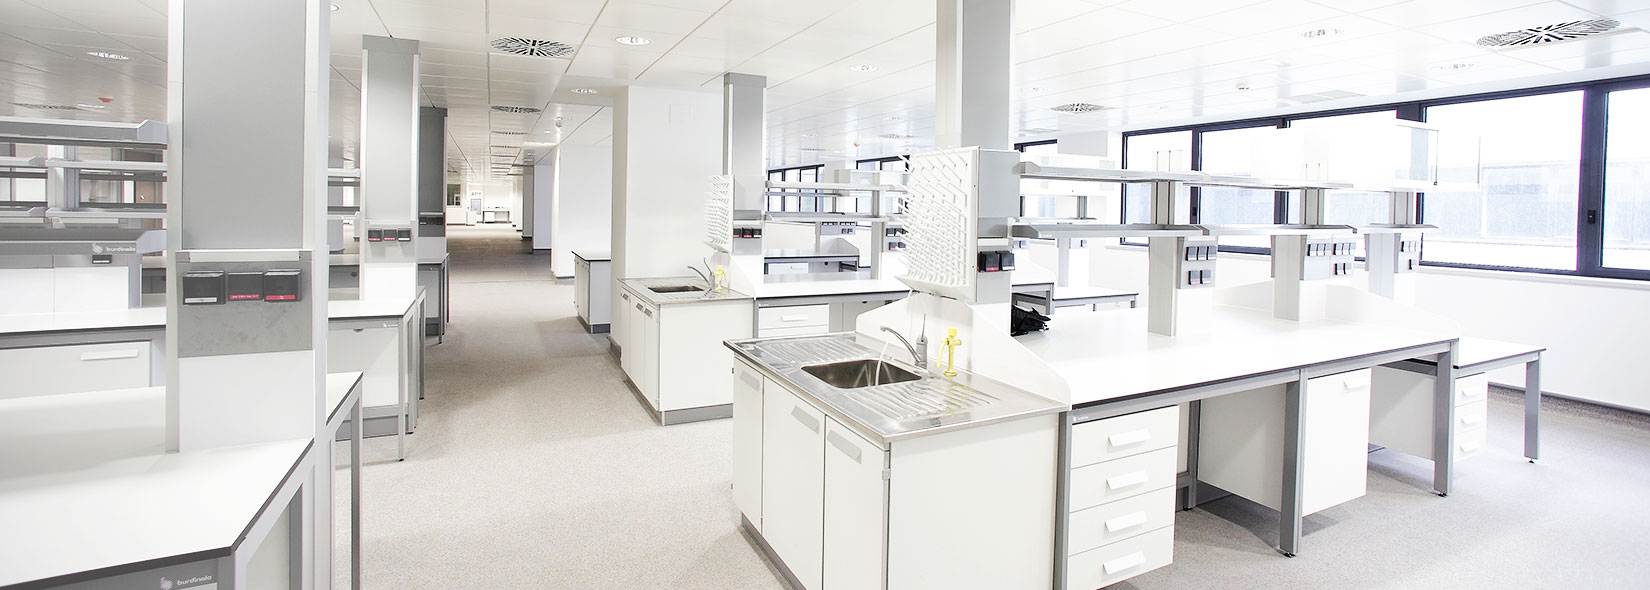 Image of a laboratory equipped with Burdinola laboratory furniture.